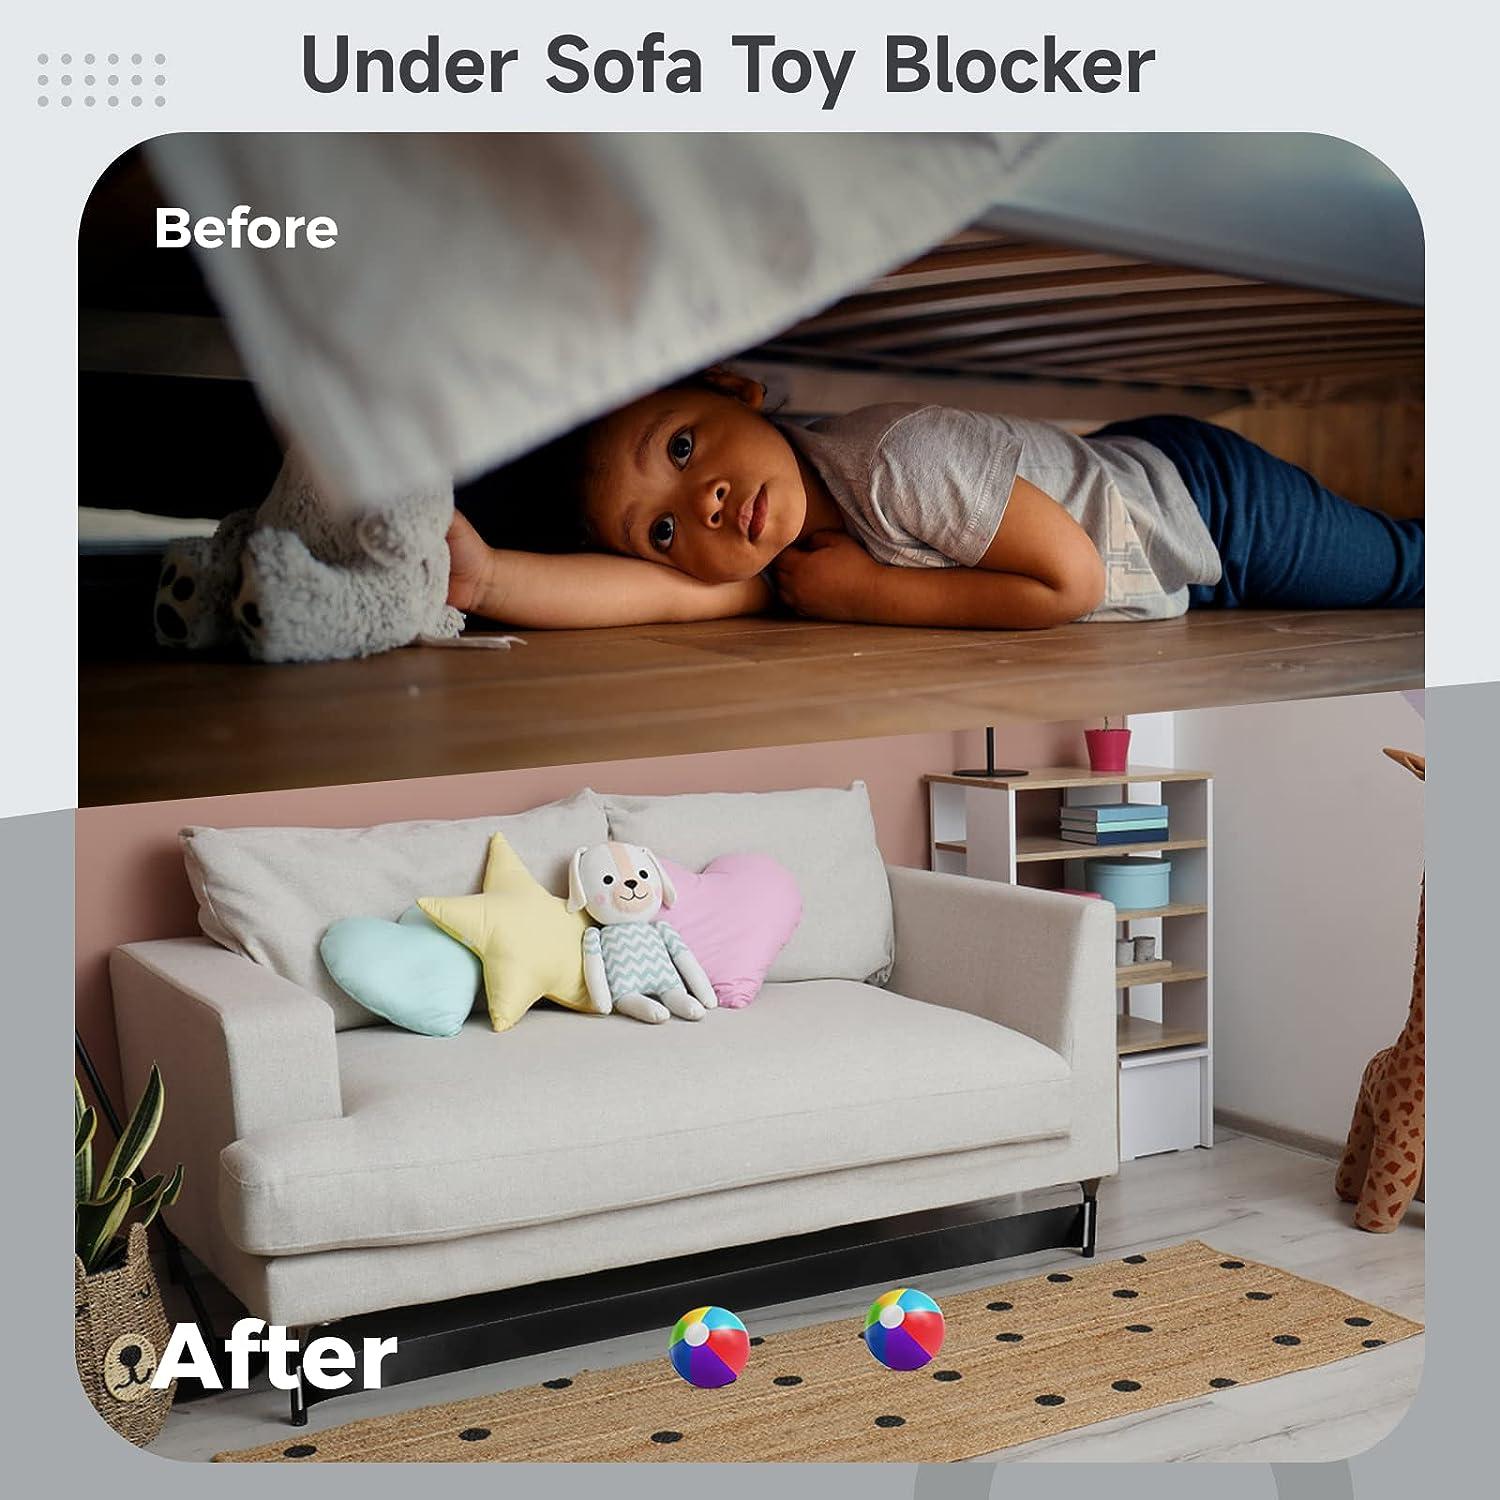  2 Rolls Toy Blocker for Under Couch Adjustable Bumper